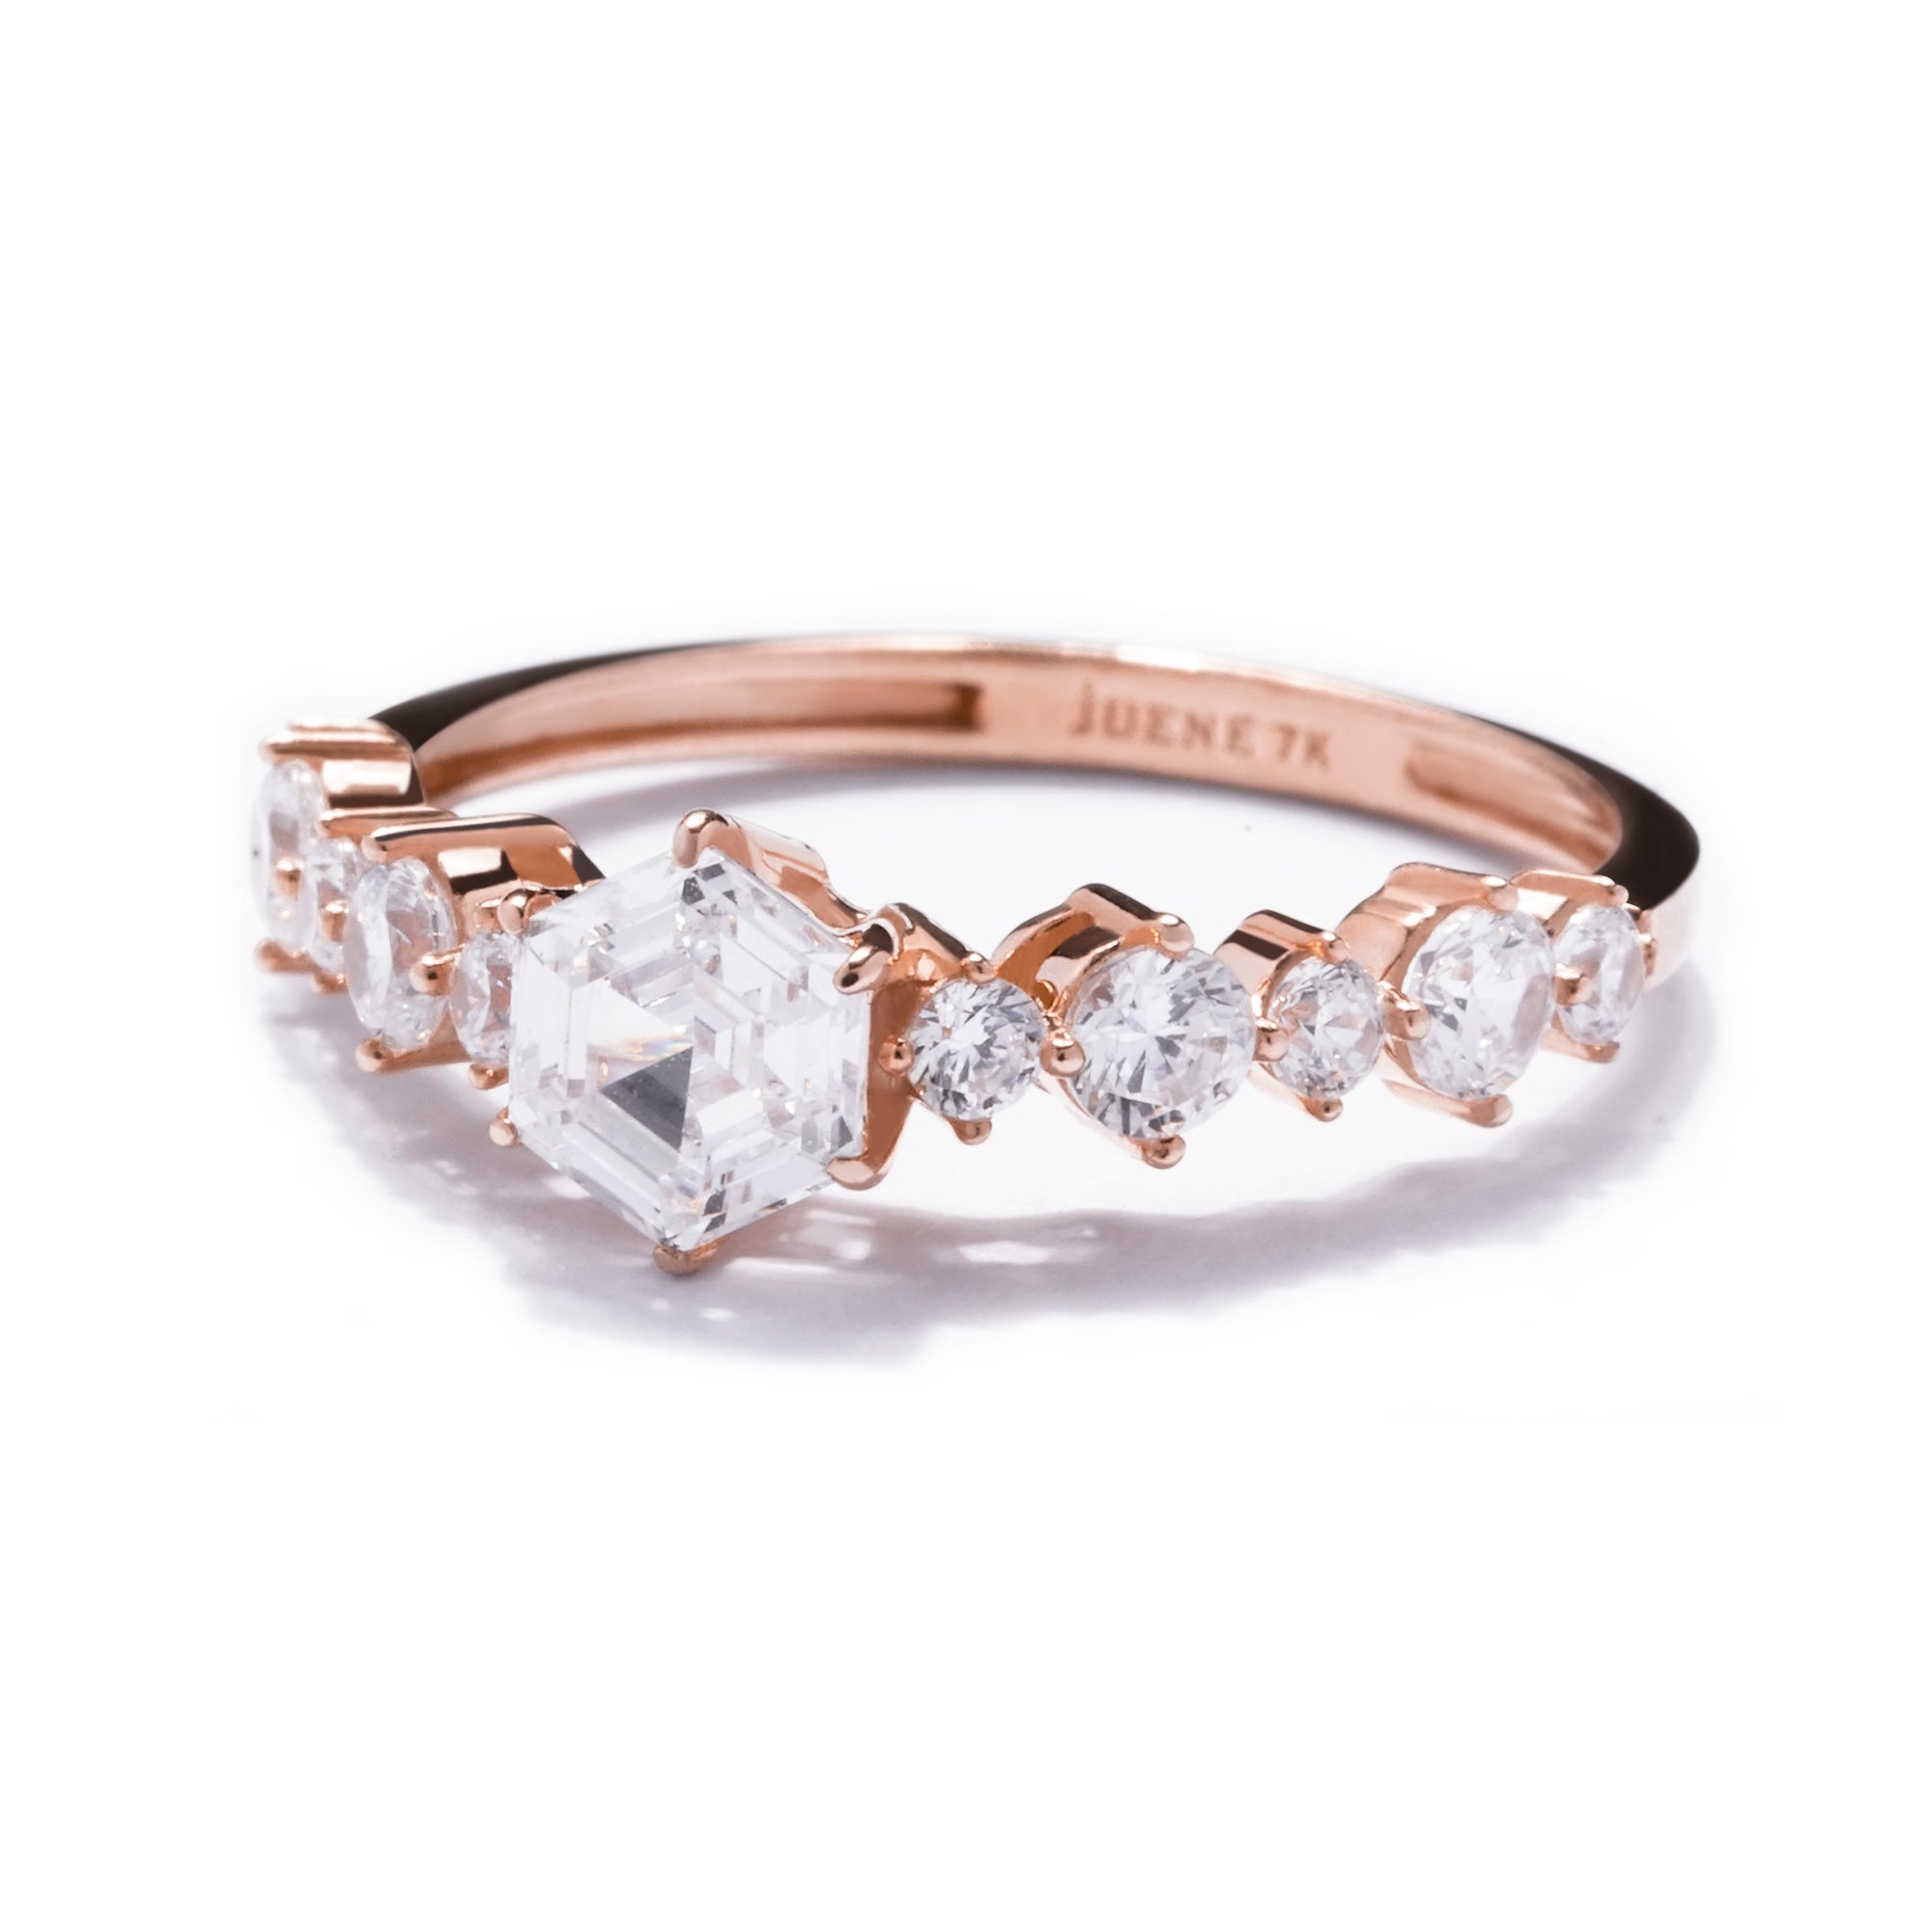 Deana Gold Ring - Sparkle & Joy - Juene Jewelry